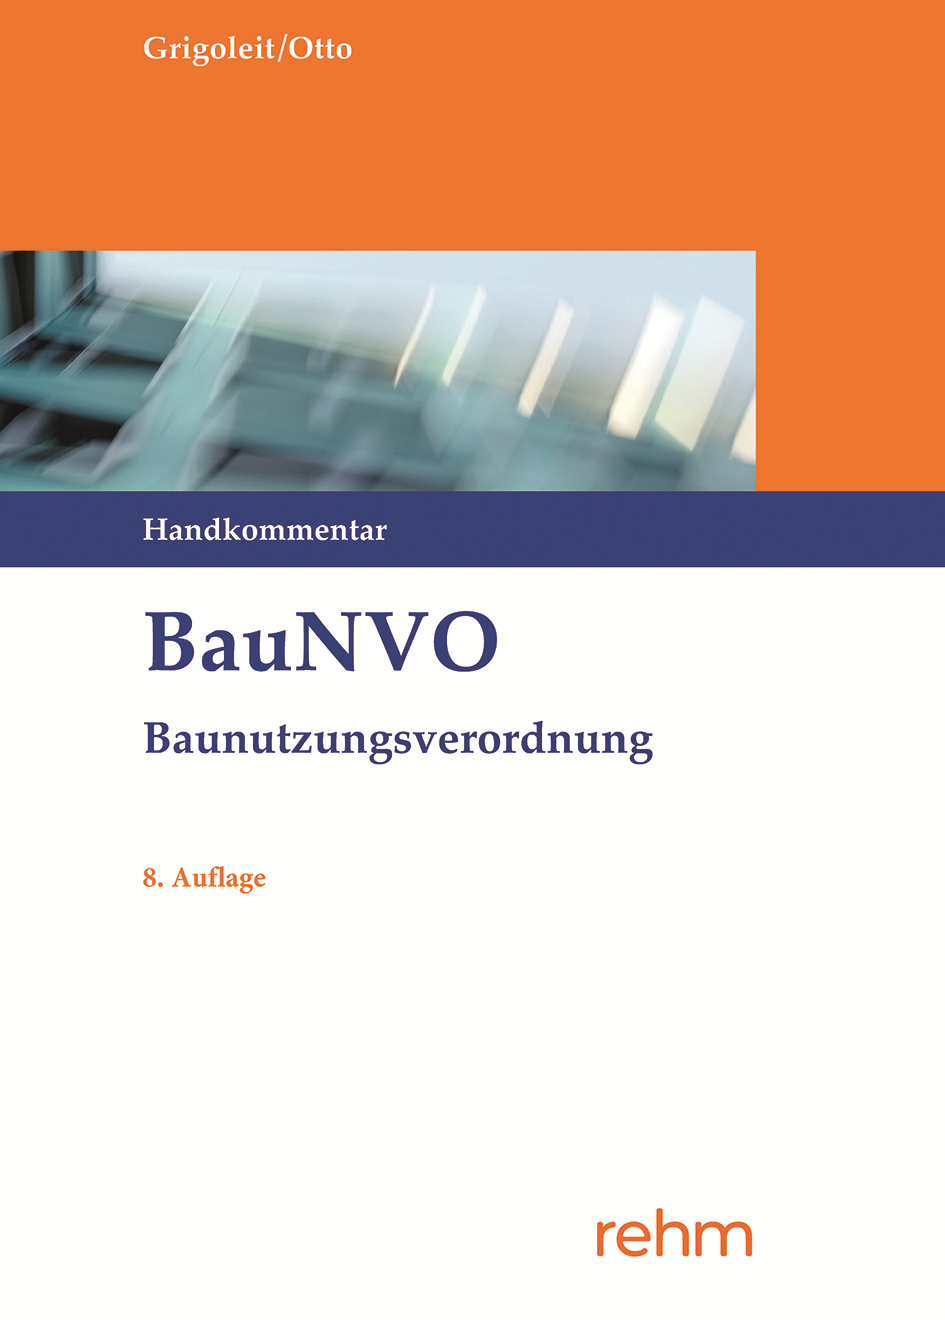 Abbildung: BauNVO - Baunutzungsverordnung